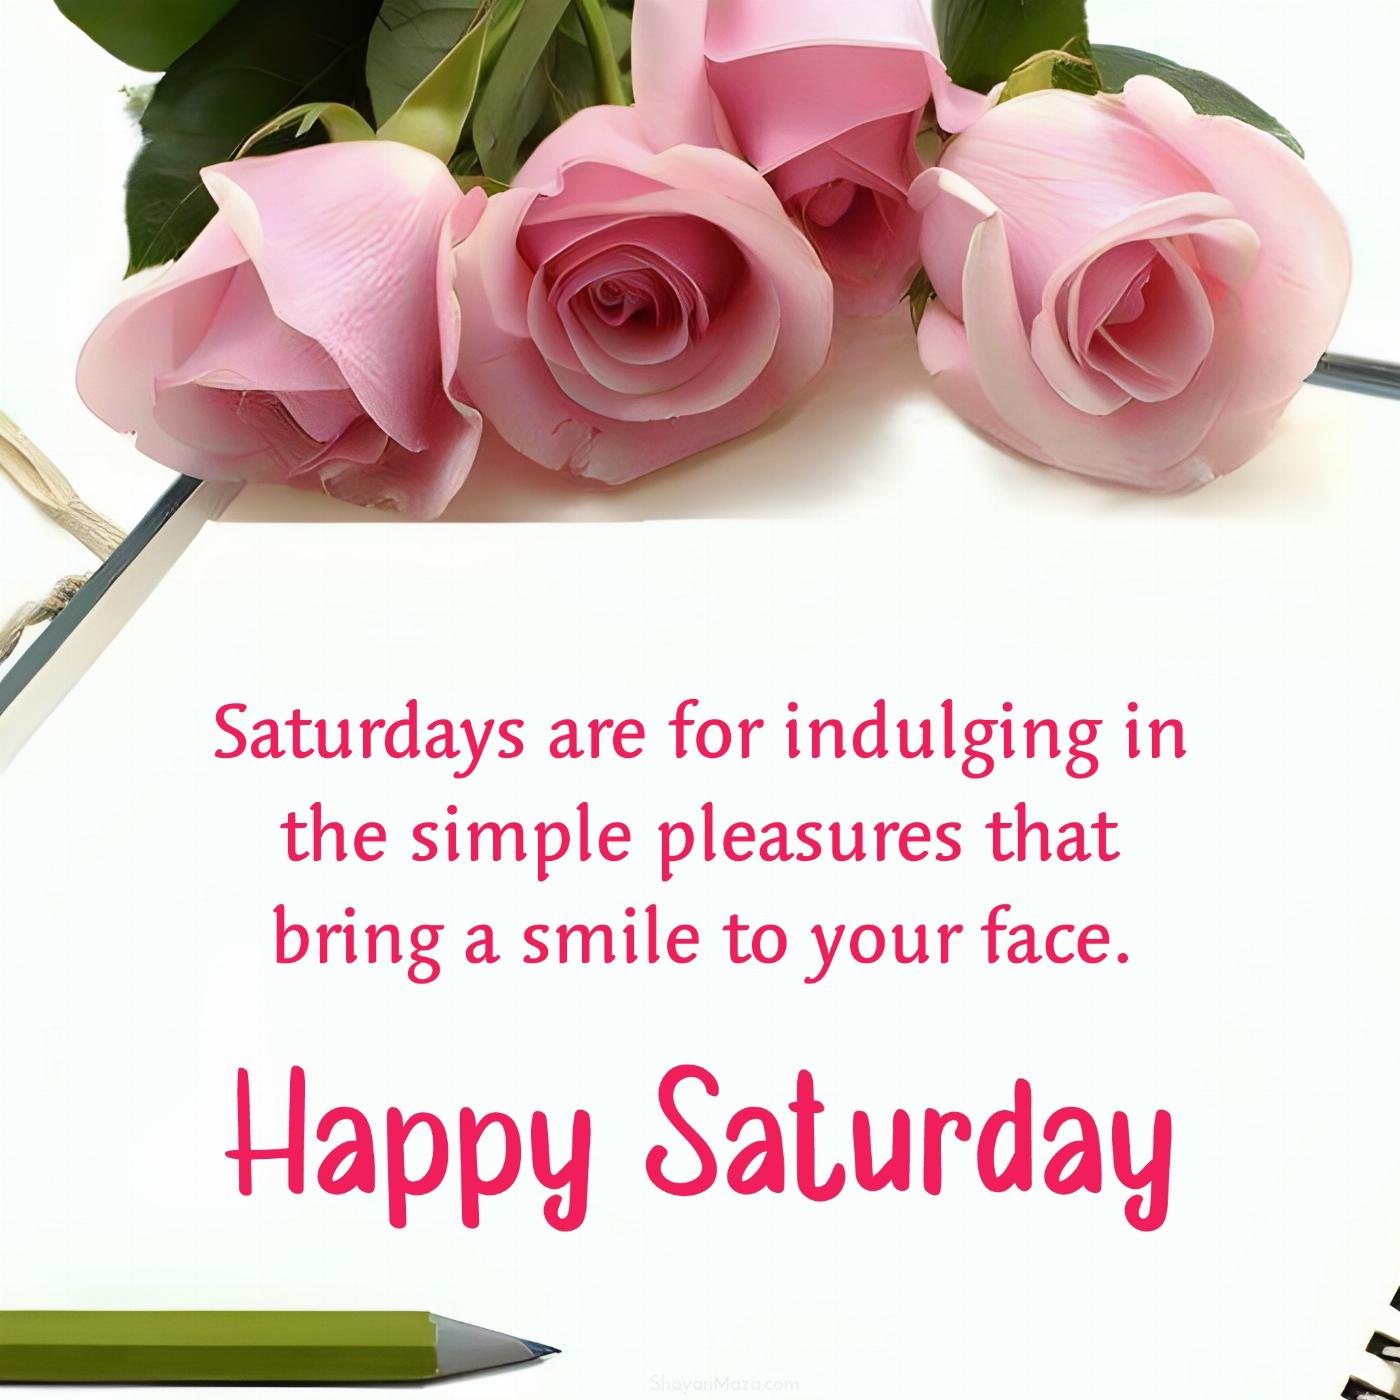 Saturdays are for indulging in the simple pleasures